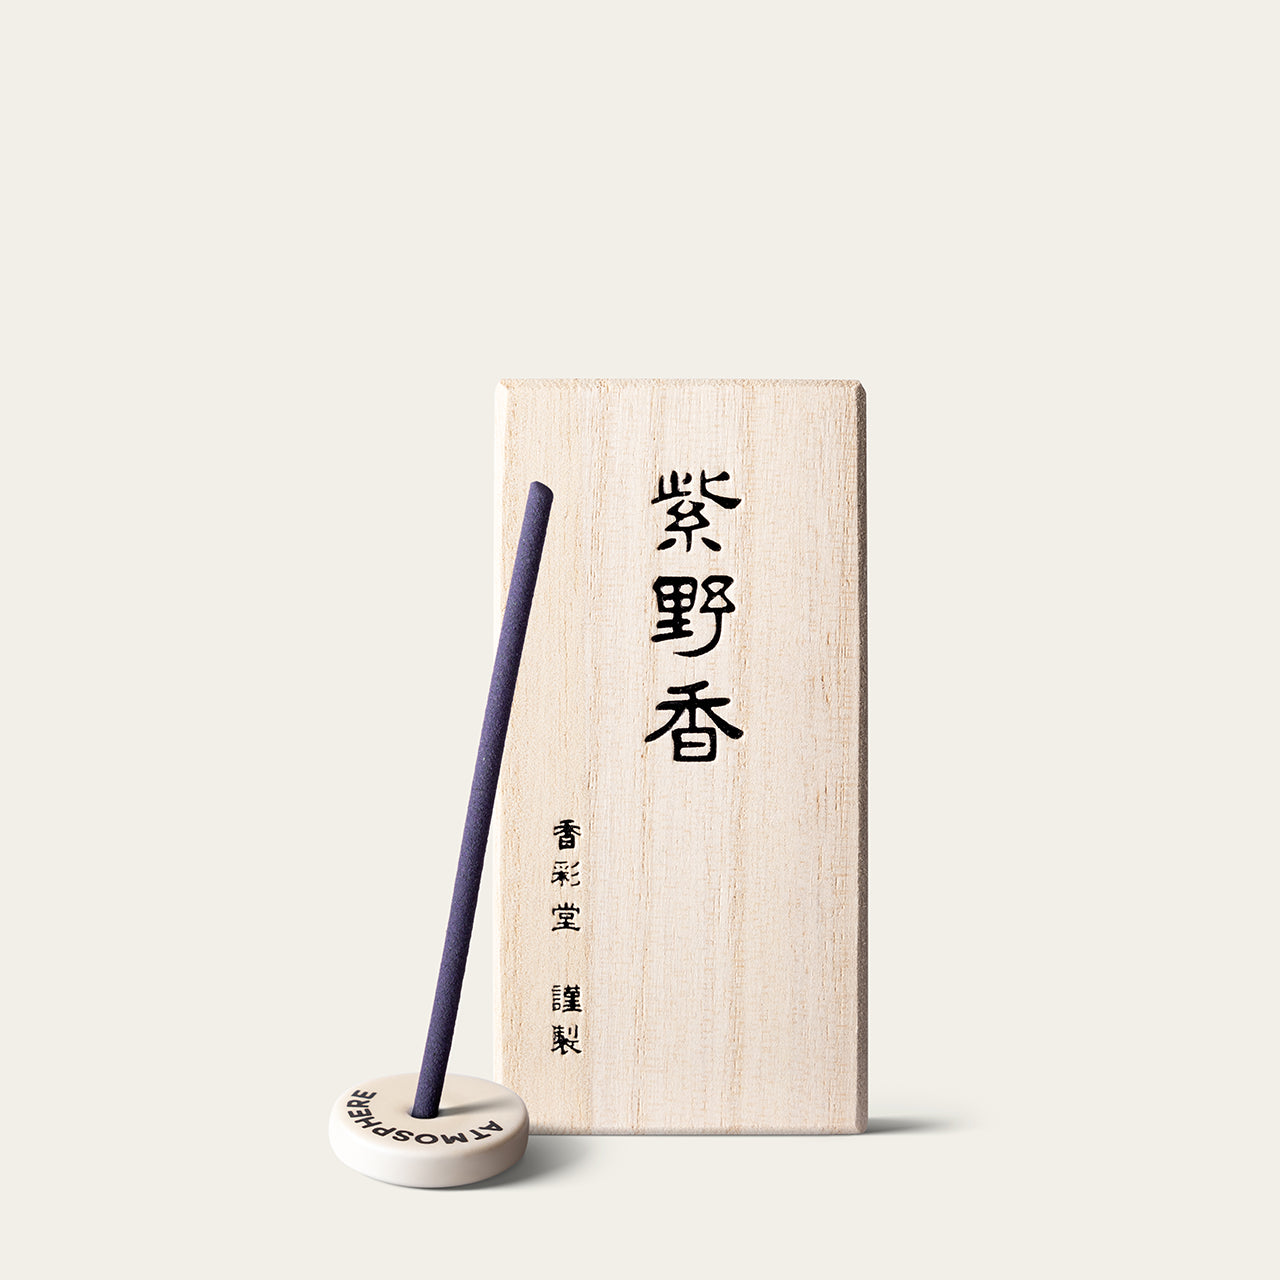 Kousaido Scenic Charm Gloaming Haze of Murasakino Japanese incense sticks (30 sticks) with Atmosphere ceramic incense holder